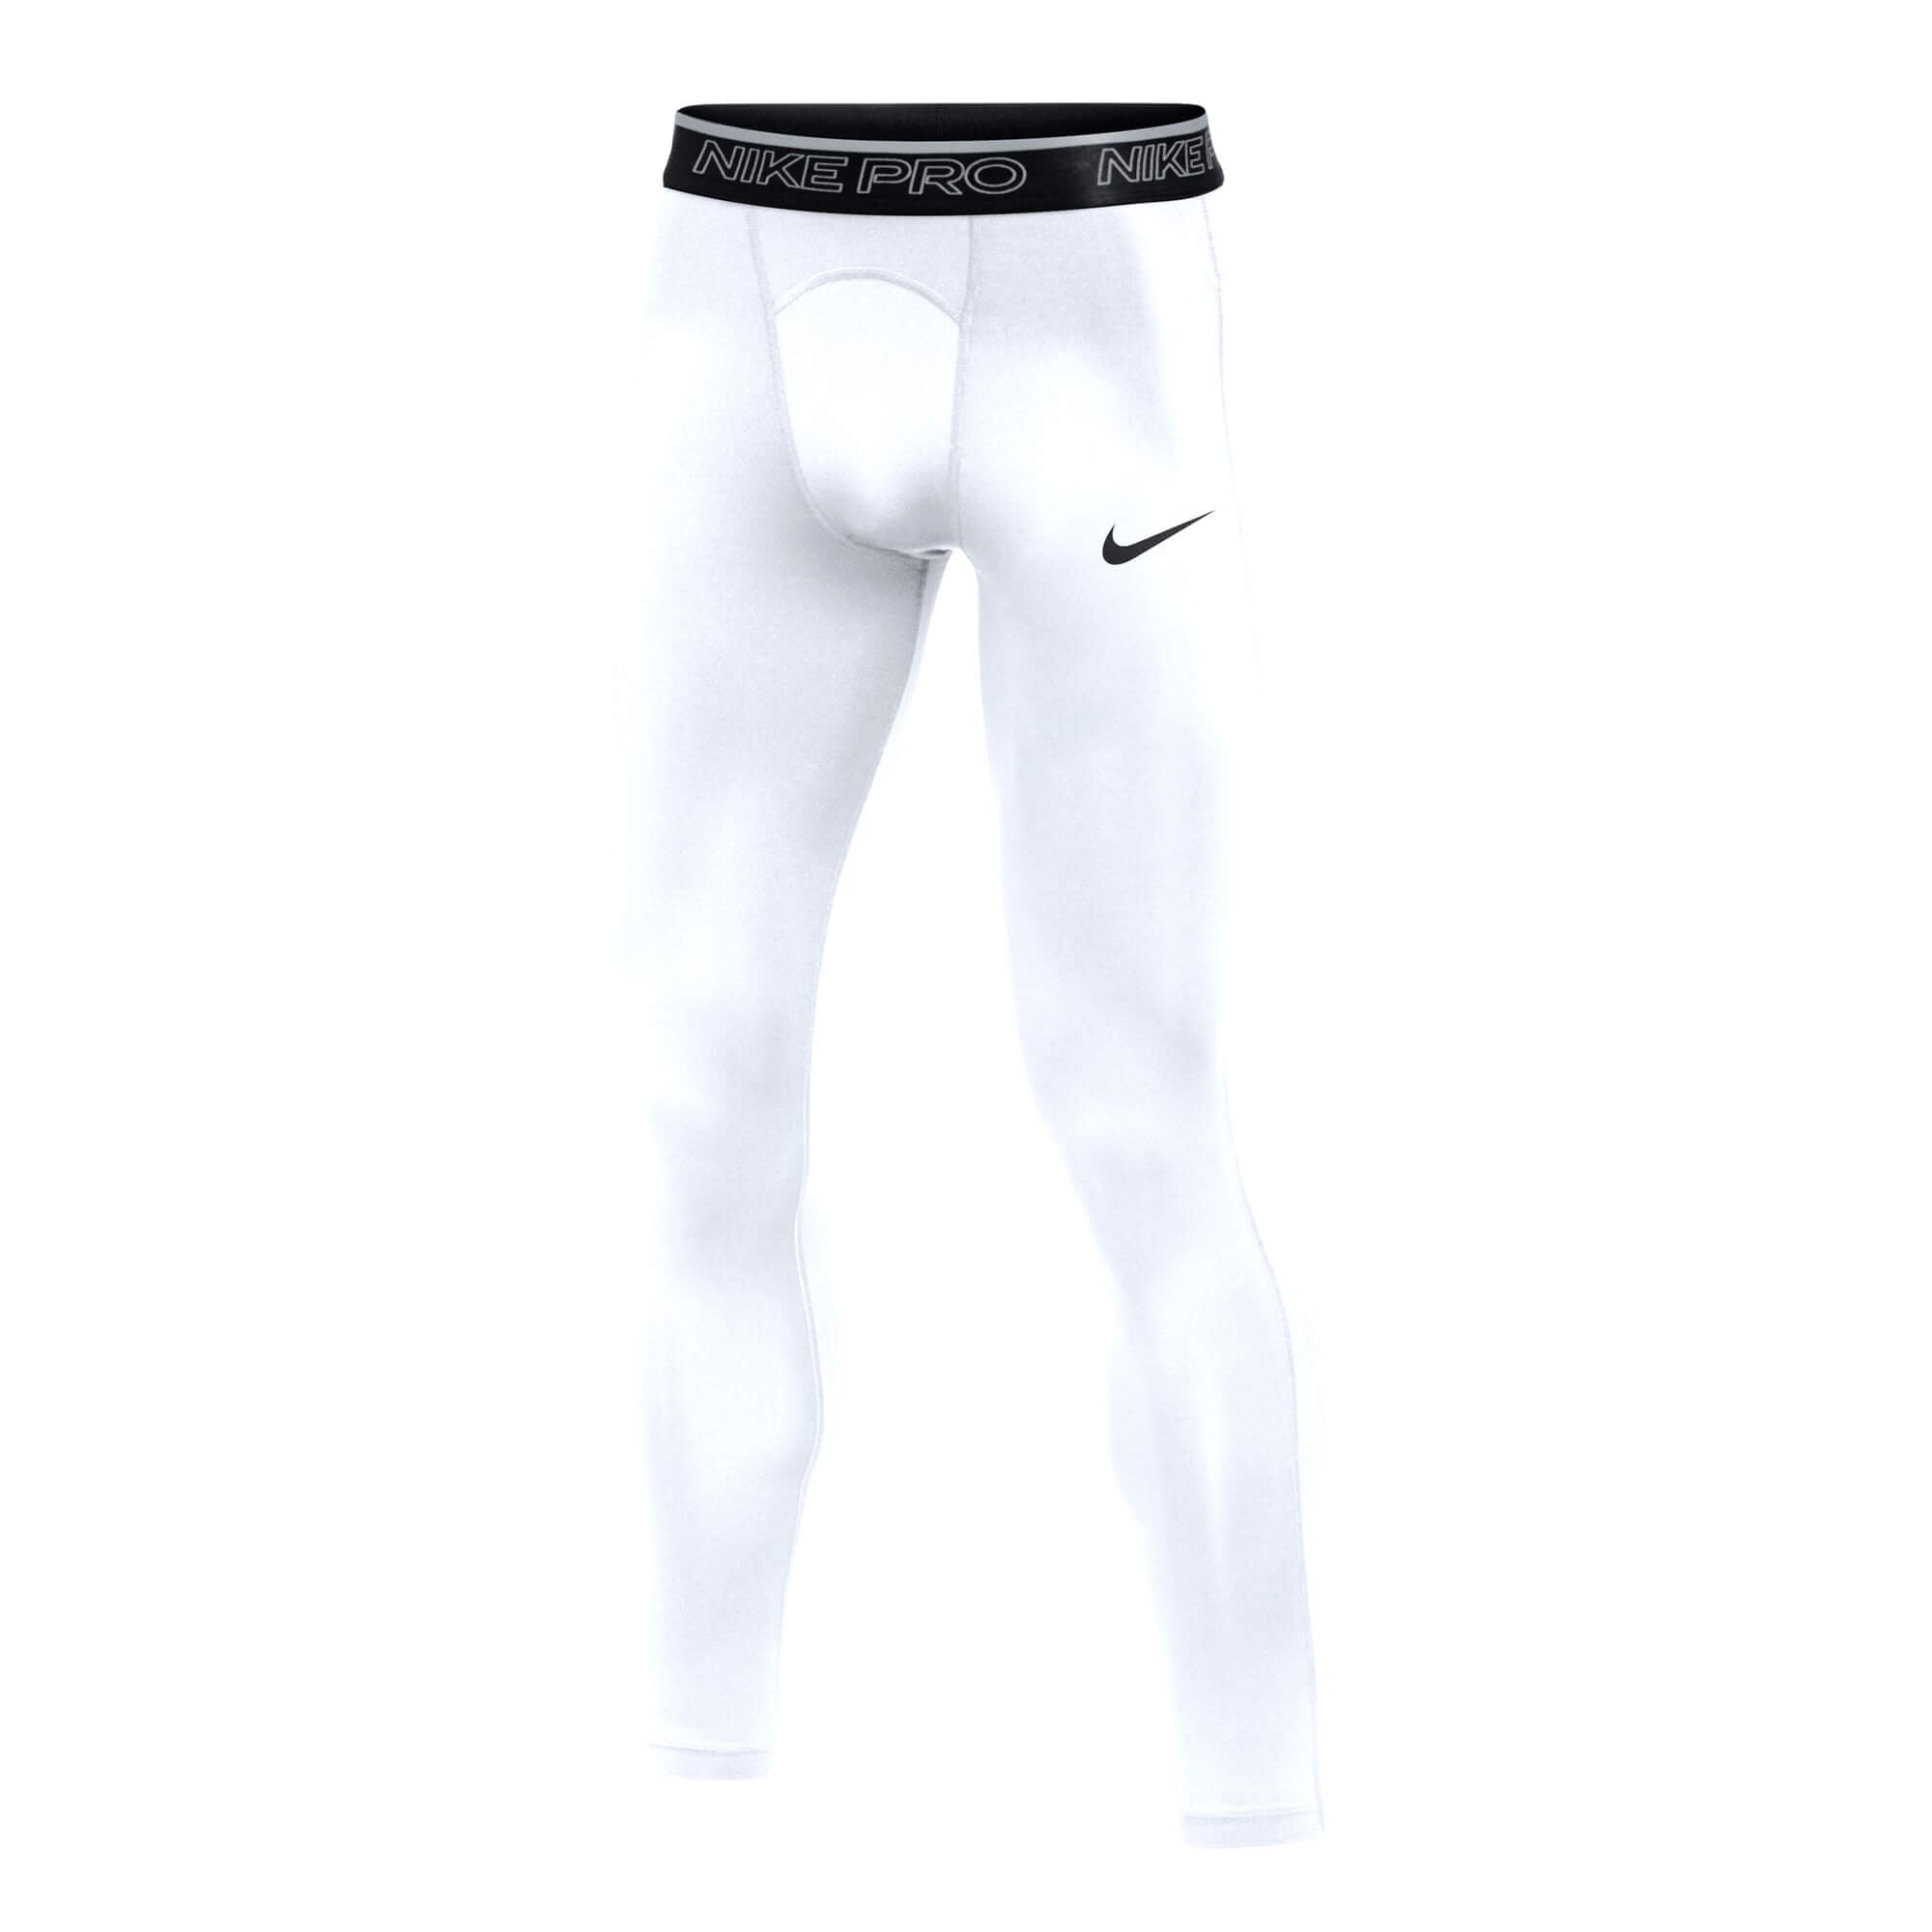 Nike Pro Training Tights, Black/White, XS